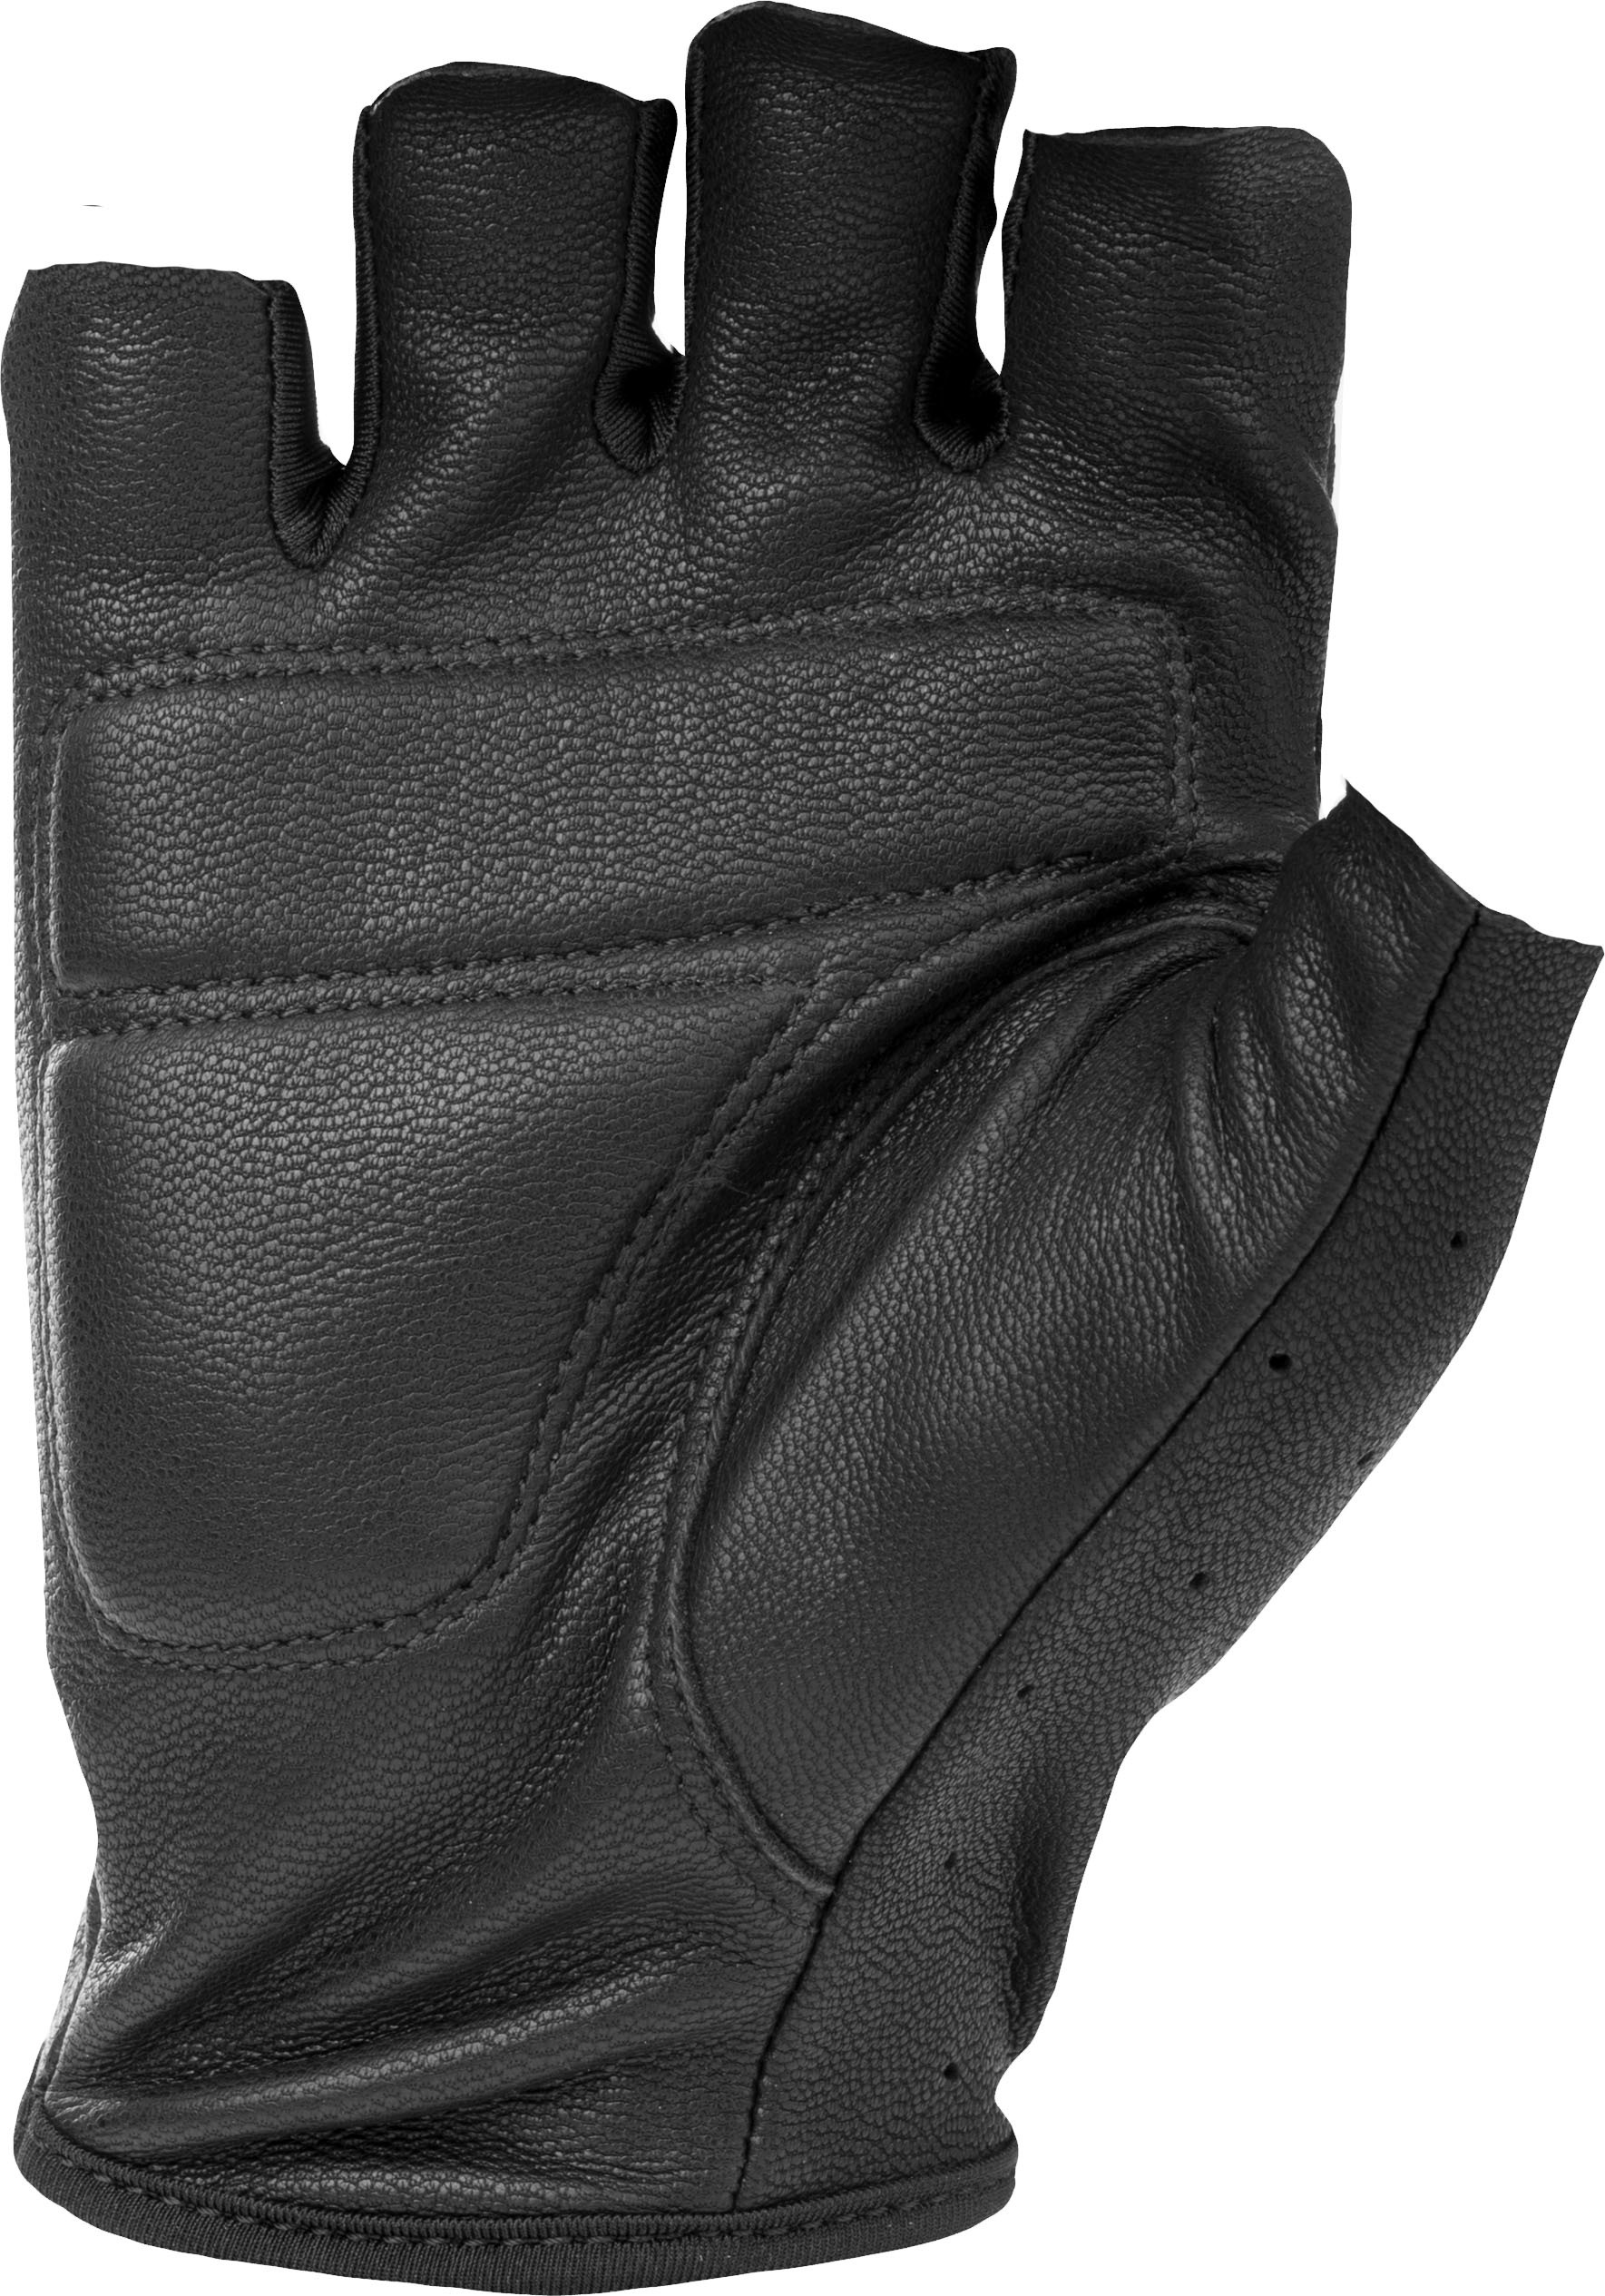 Ranger Riding Gloves Black 2X-Large - Click Image to Close